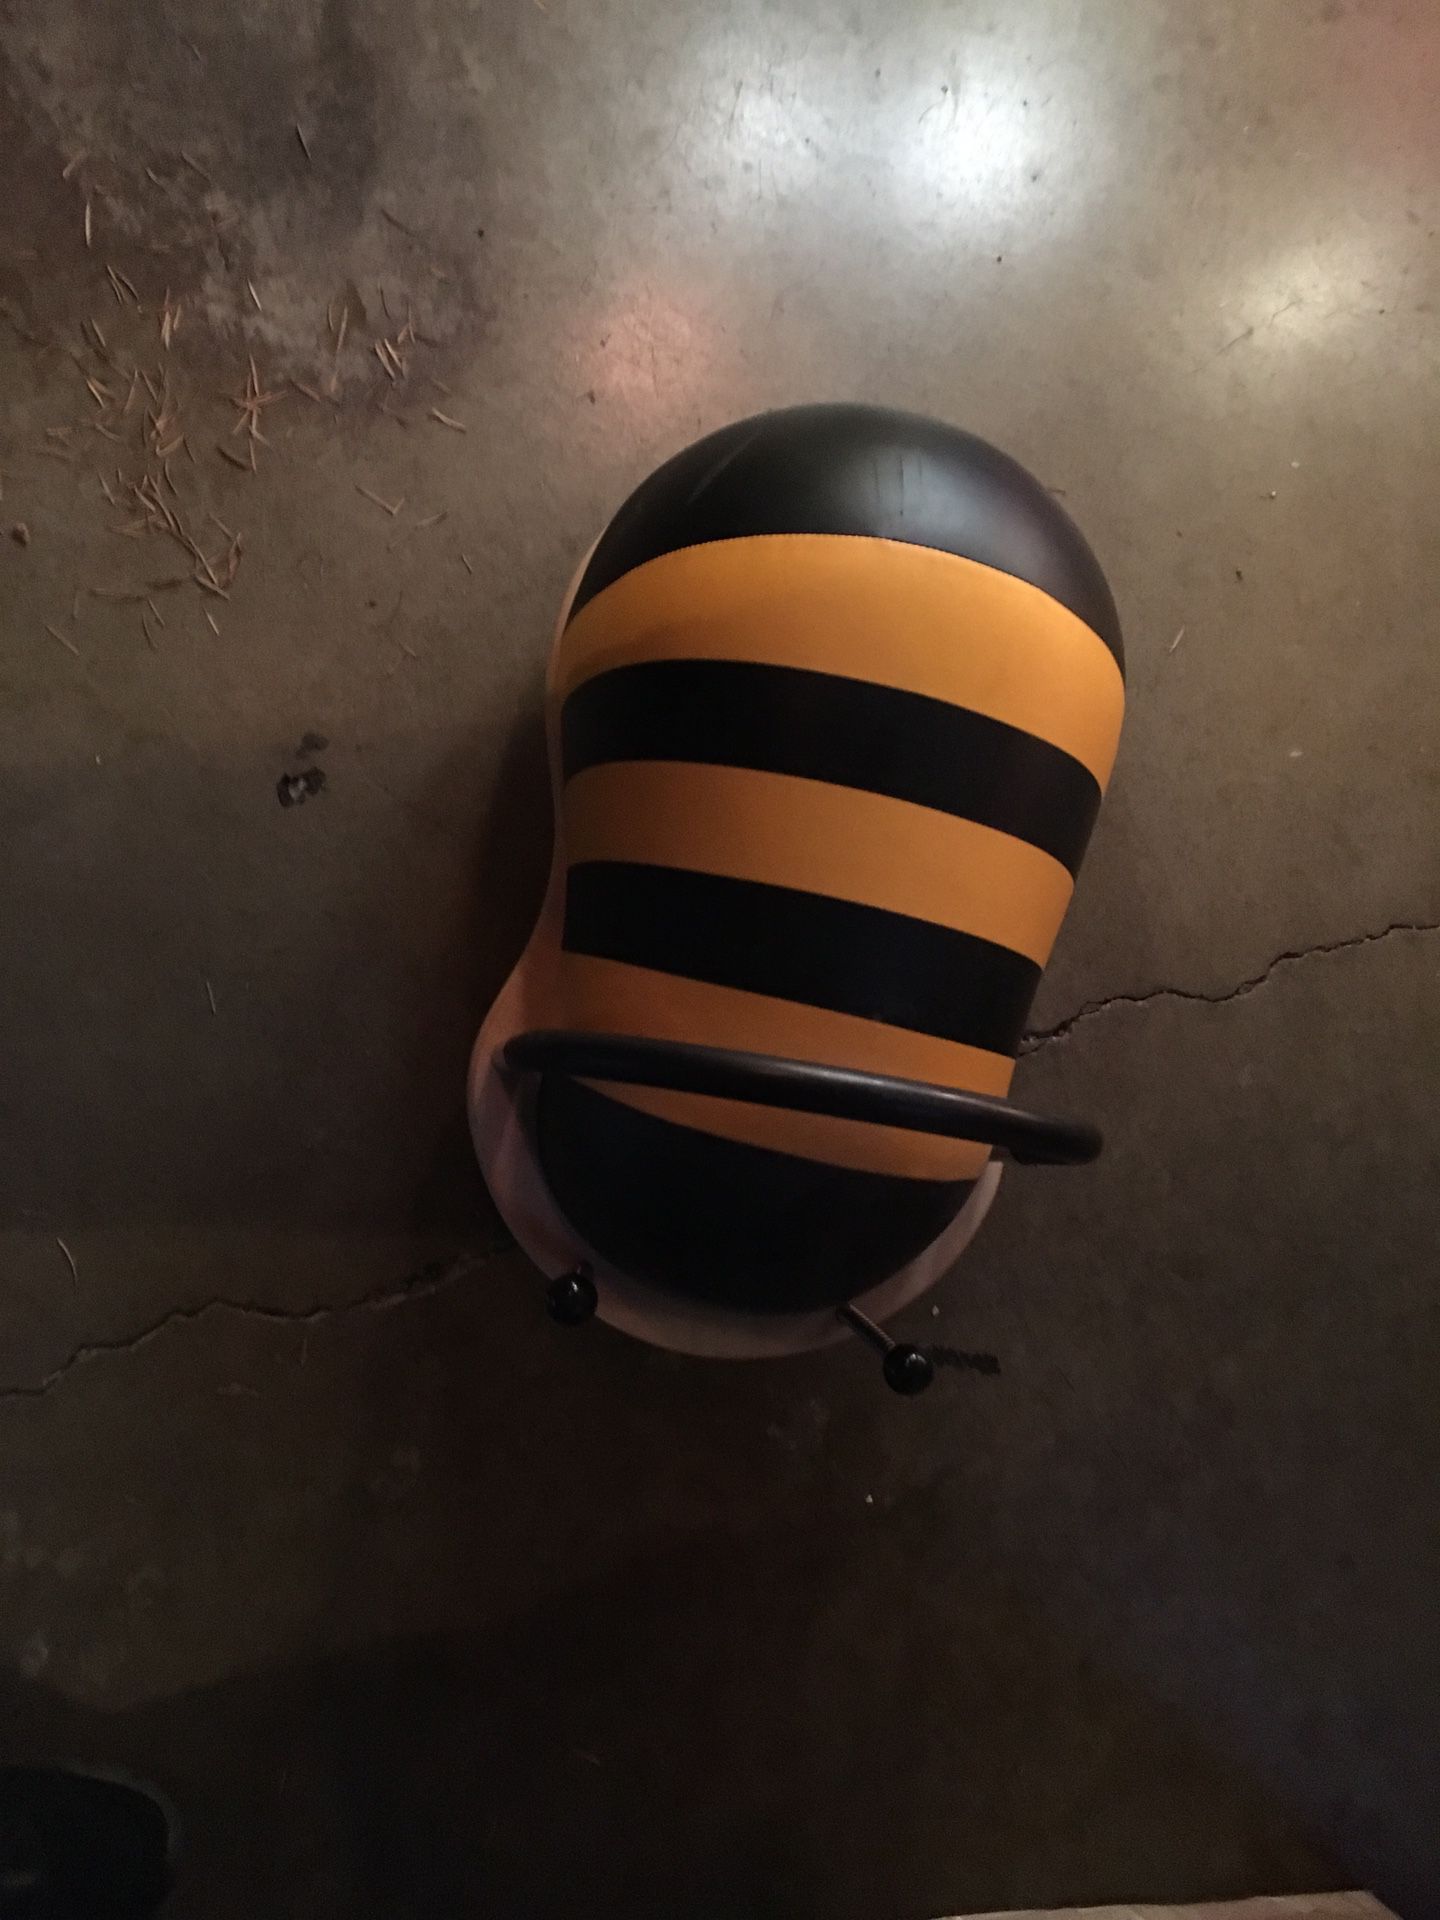 Bee ride on wiggled